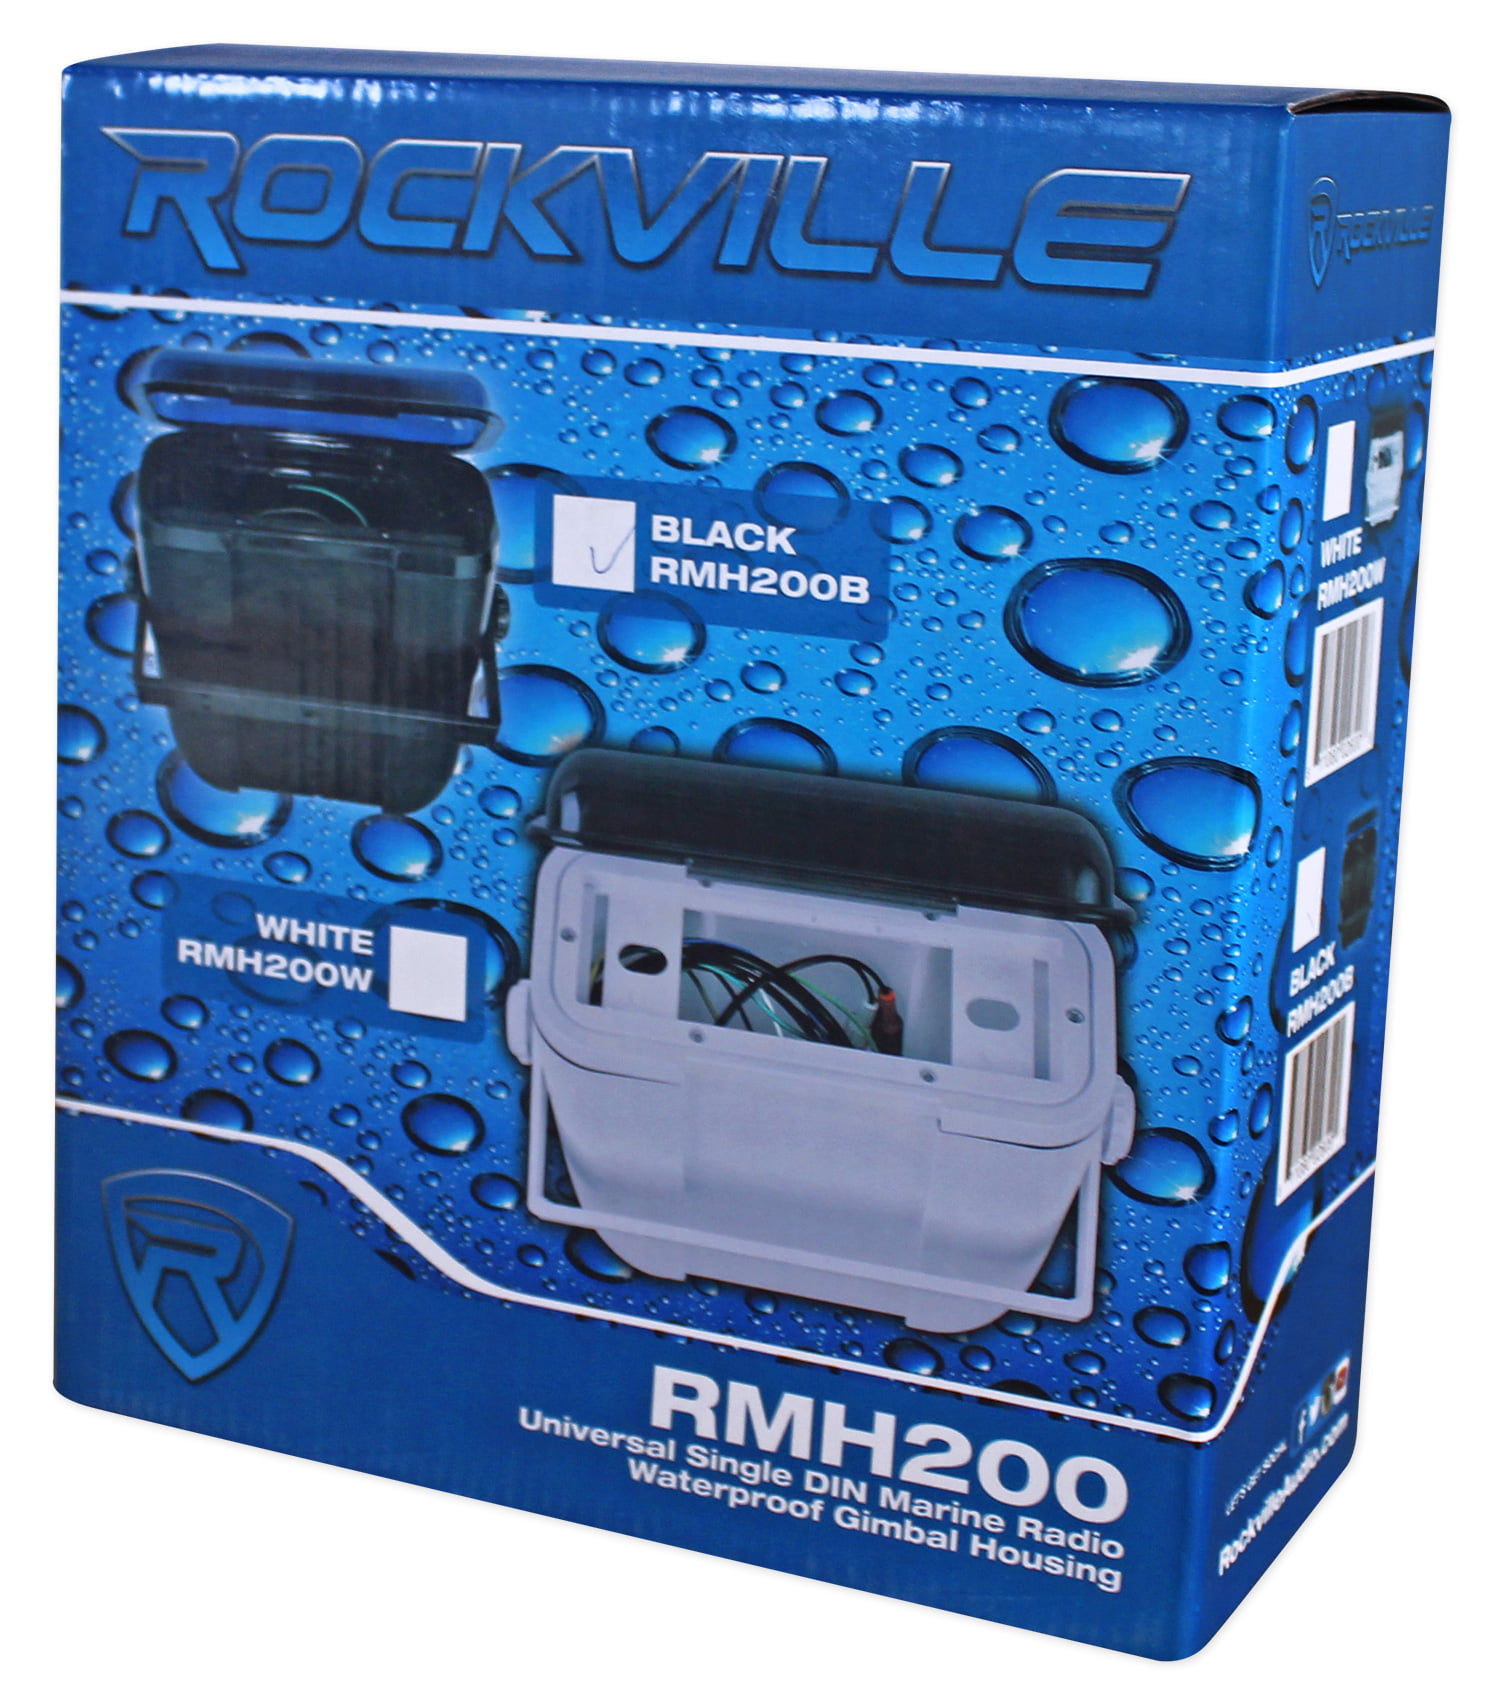 Rockville RMH200B Single DIN Marine Receiver Waterproof Gimbal Housing Black 